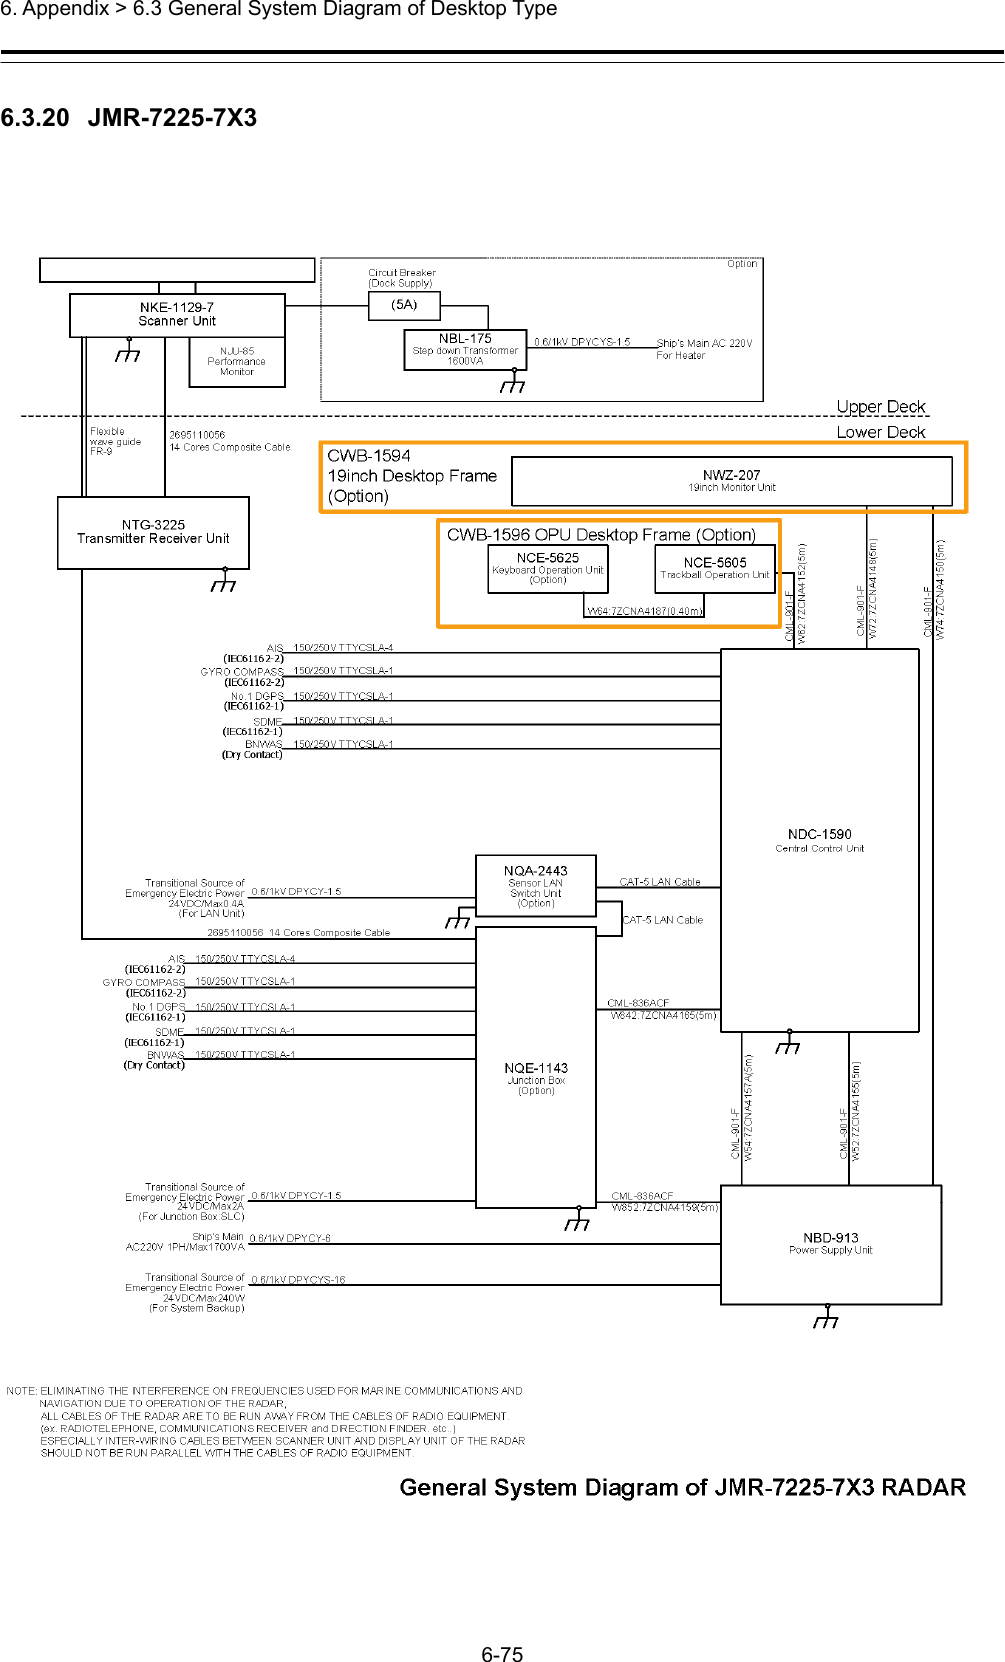  6. Appendix &gt; 6.3 General System Diagram of Desktop Type 6-75  6.3.20  JMR-7225-7X3 